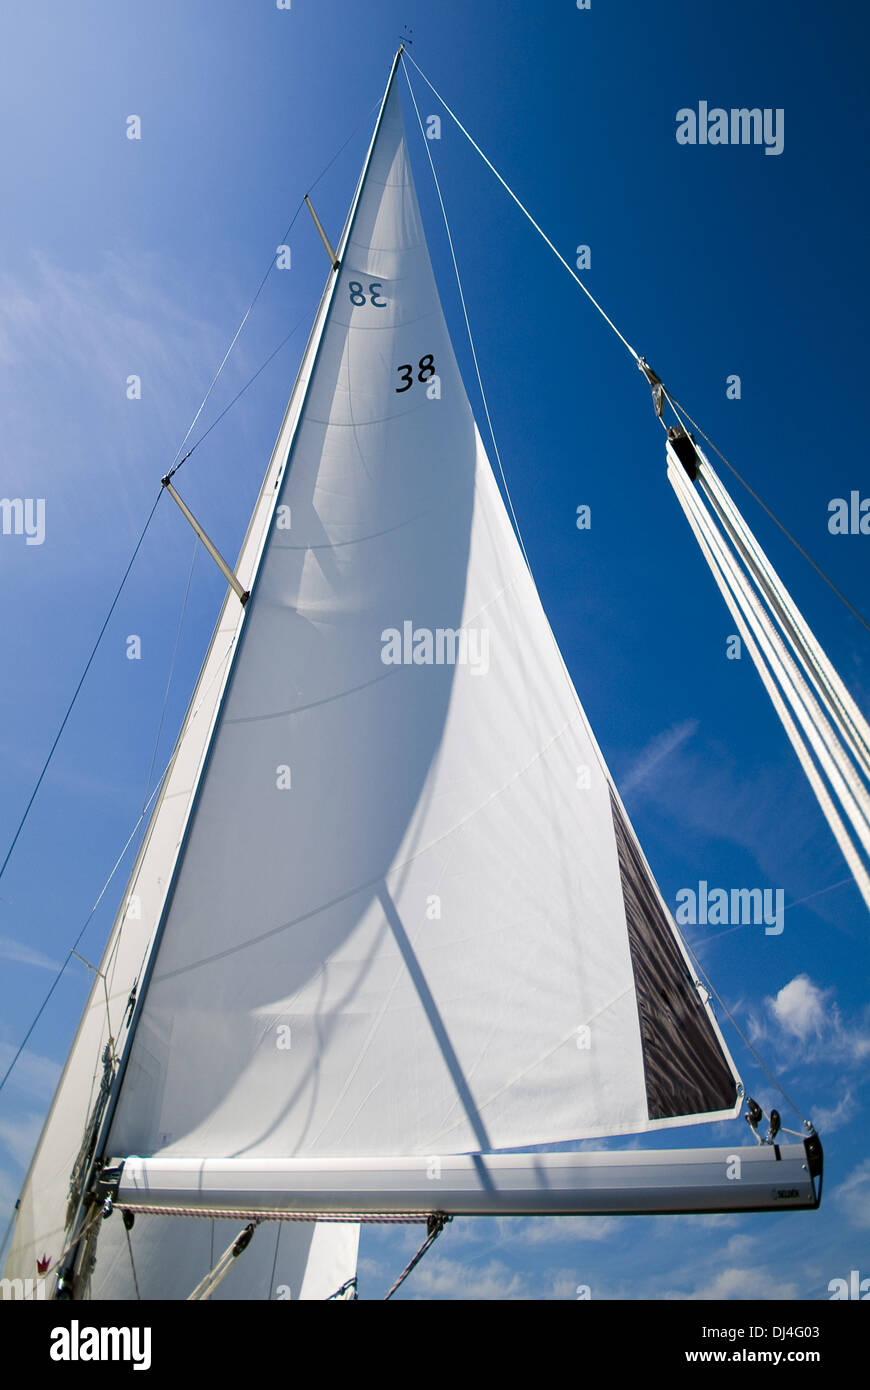 Vela mayor de un velero Fotografía de stock - Alamy